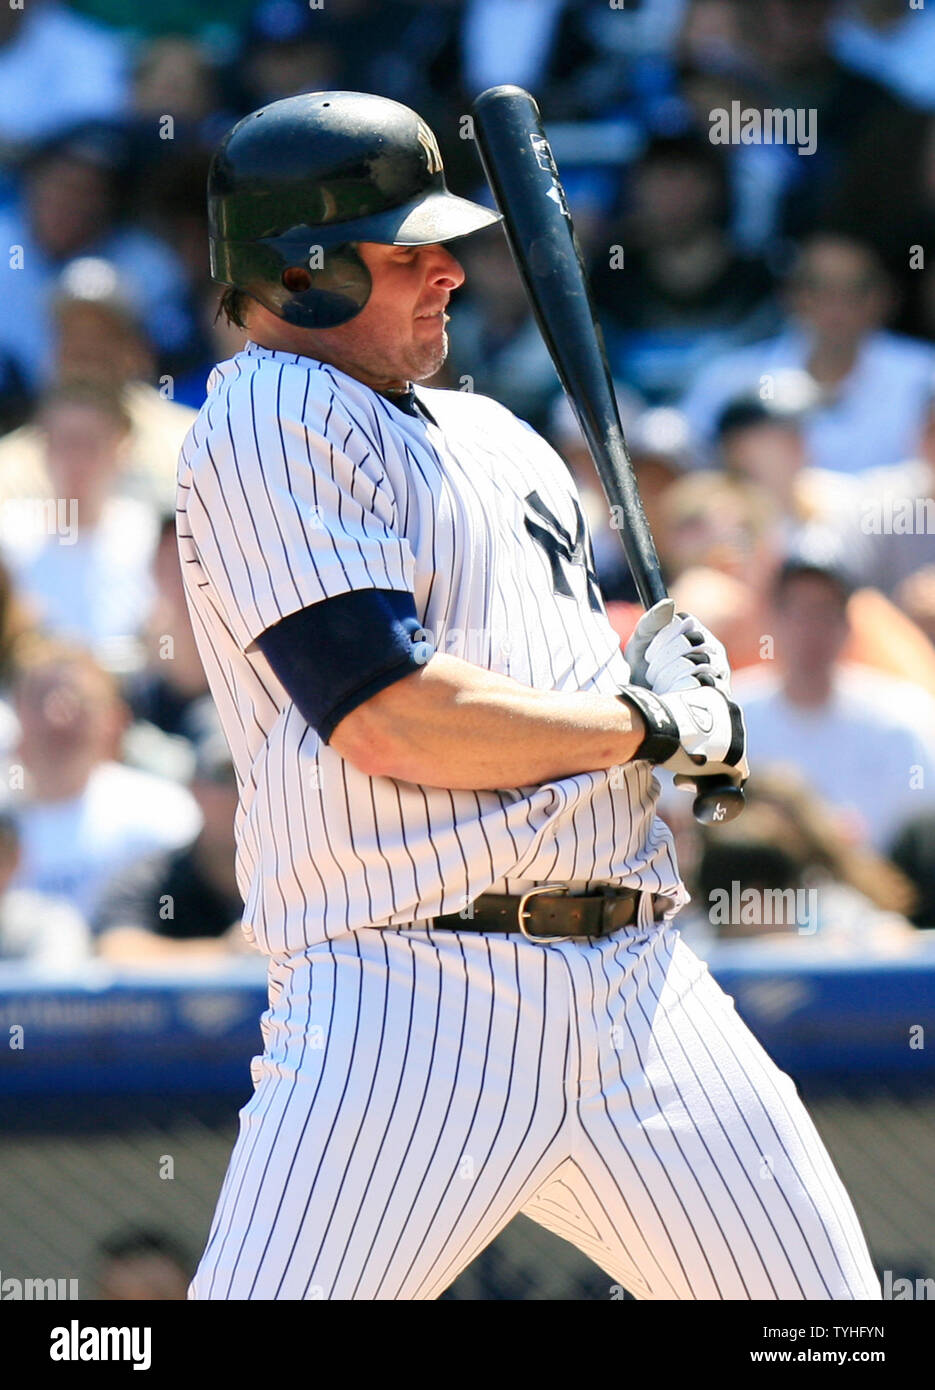 Jason Giambi, New York Yankees 1B. Editorial Stock Image - Image